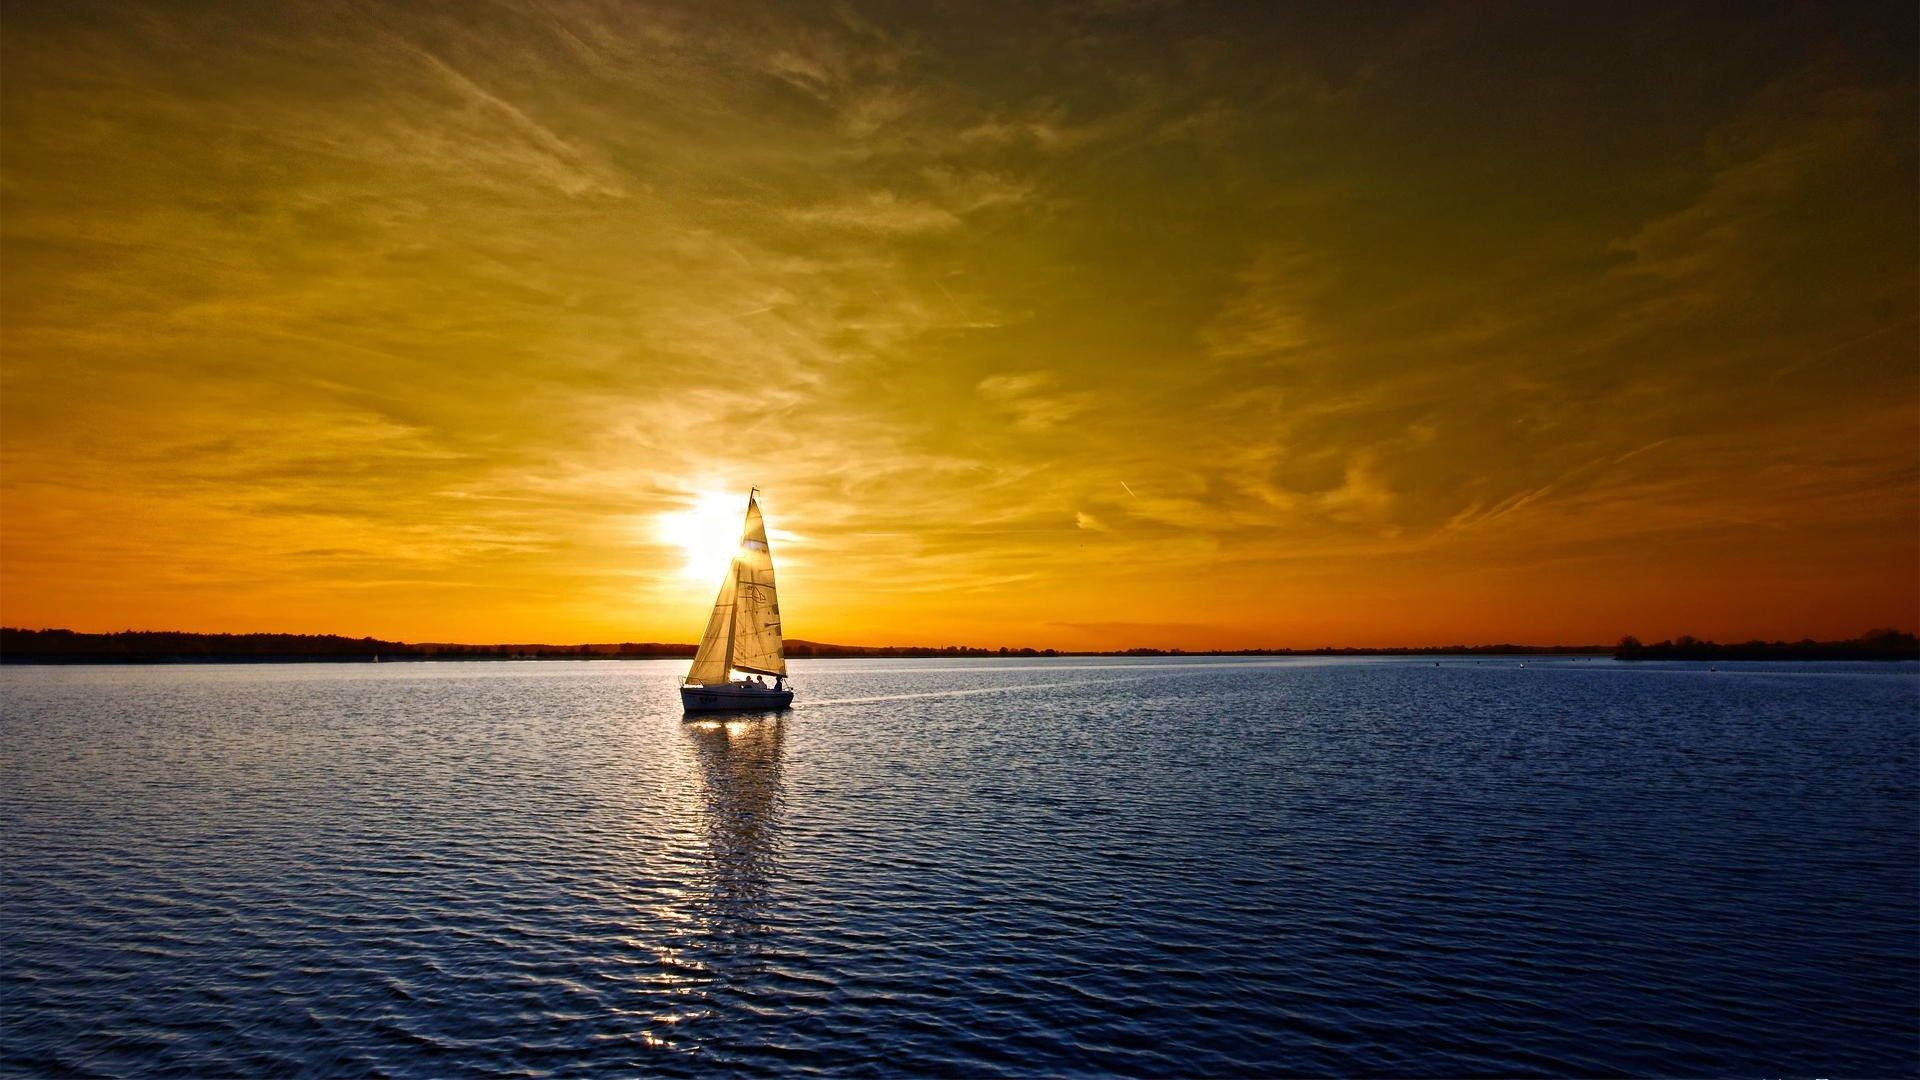 Solo Sailing at Sunset HD Wallpaper FullHDWpp   Full HD